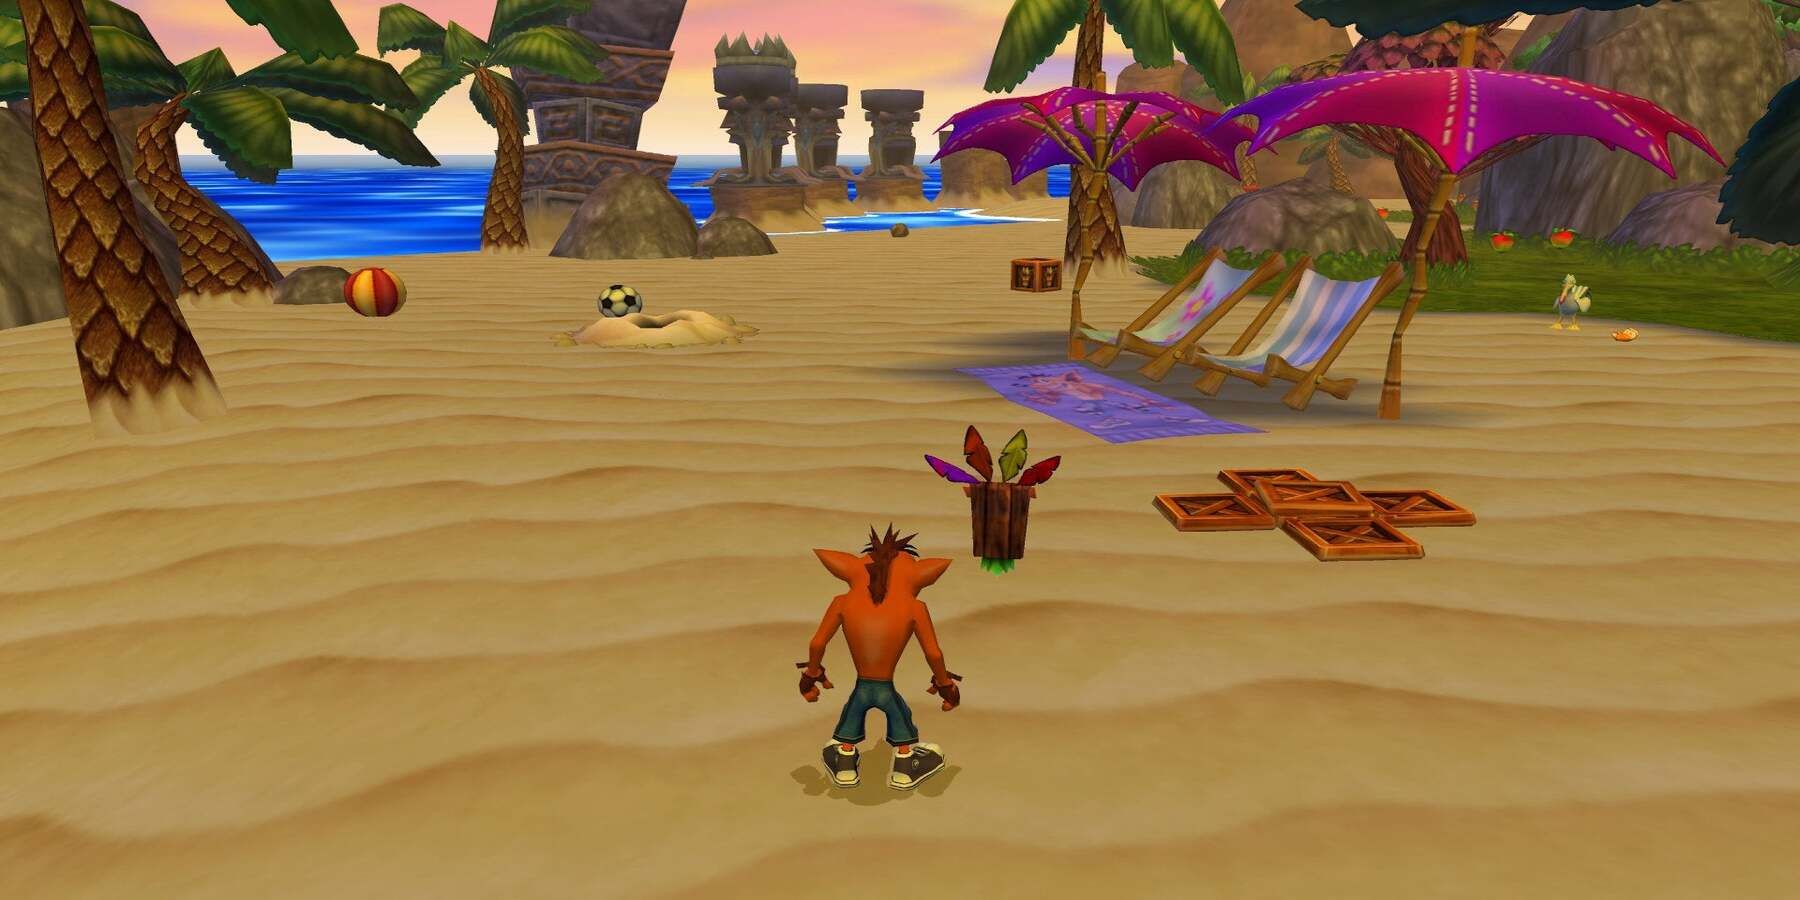 Crash Bandicoot on a beach